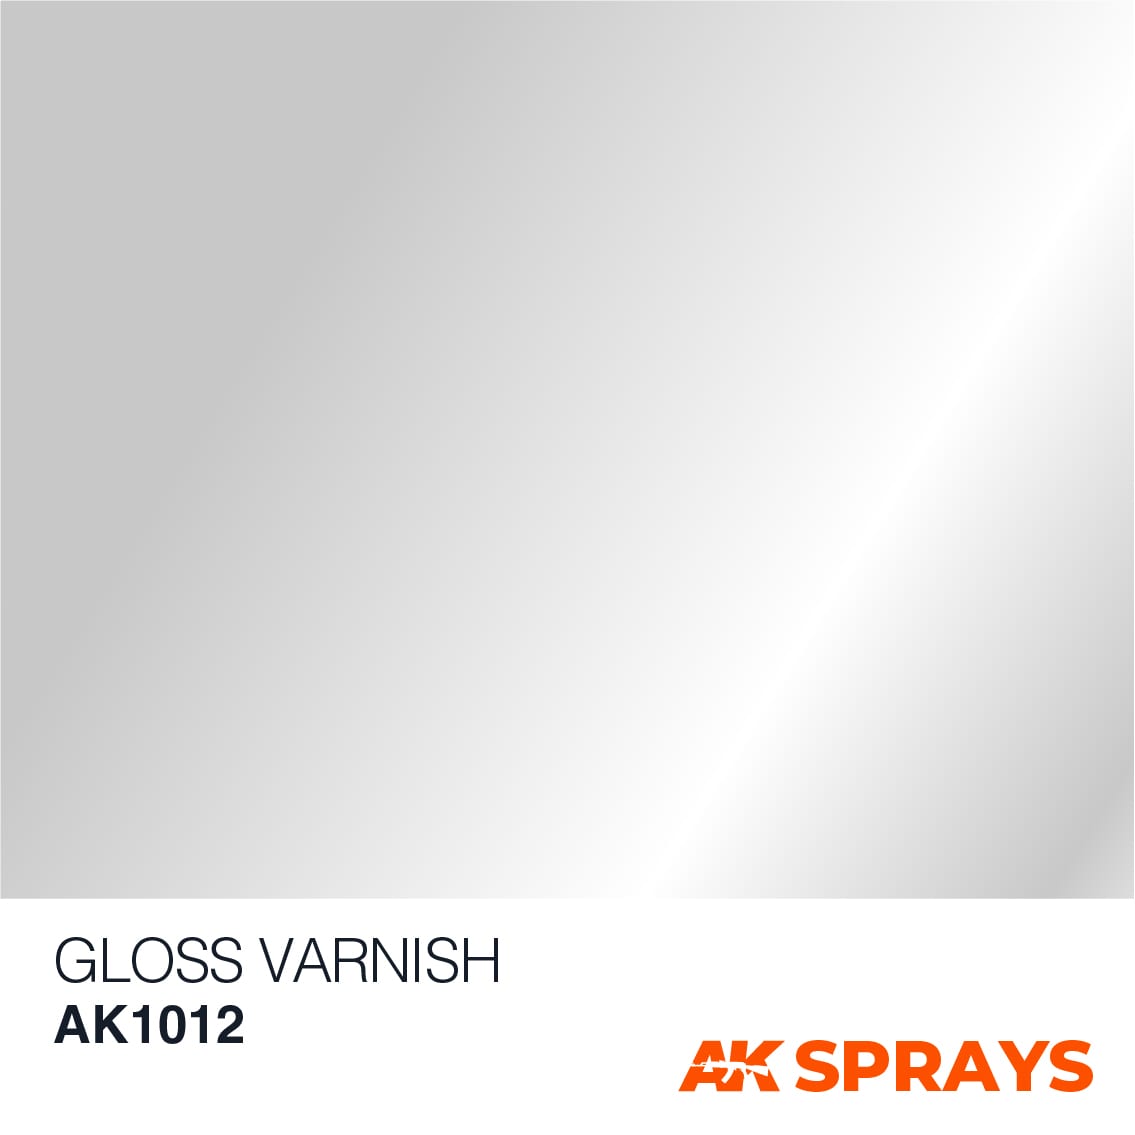 Gloss Varnish - Spray 400ml (Includes 2 nozzles)